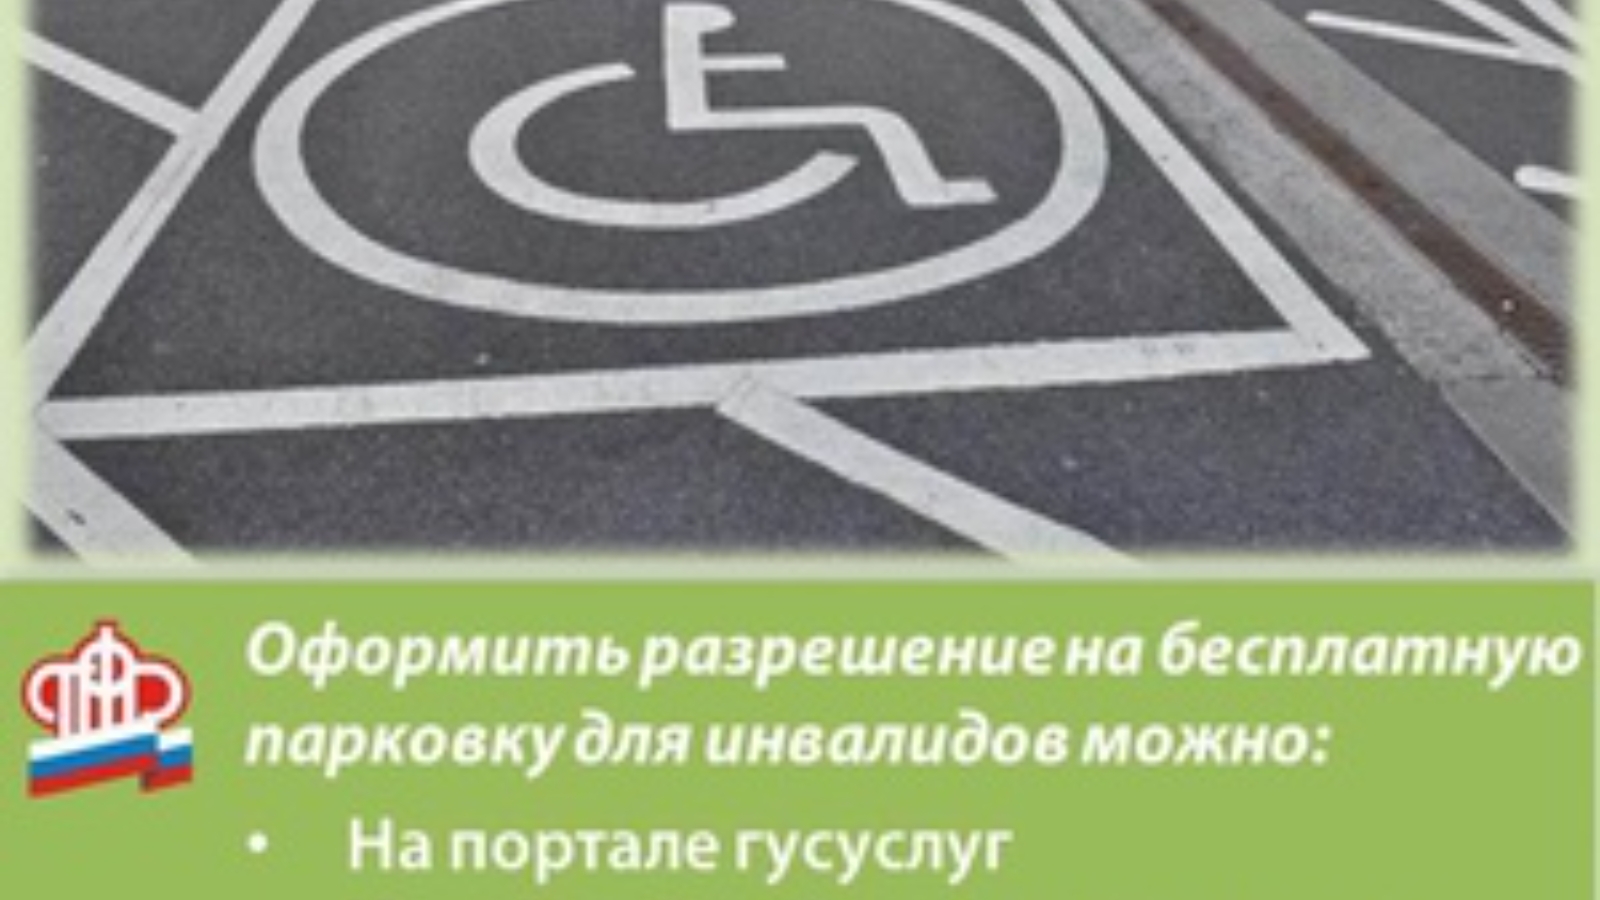 Каким инвалидам можно парковаться. Стоянка для инвалидов. Табличка стоянка для инвалидов. Места для инвалидов. Льготная парковка для инвалидов.